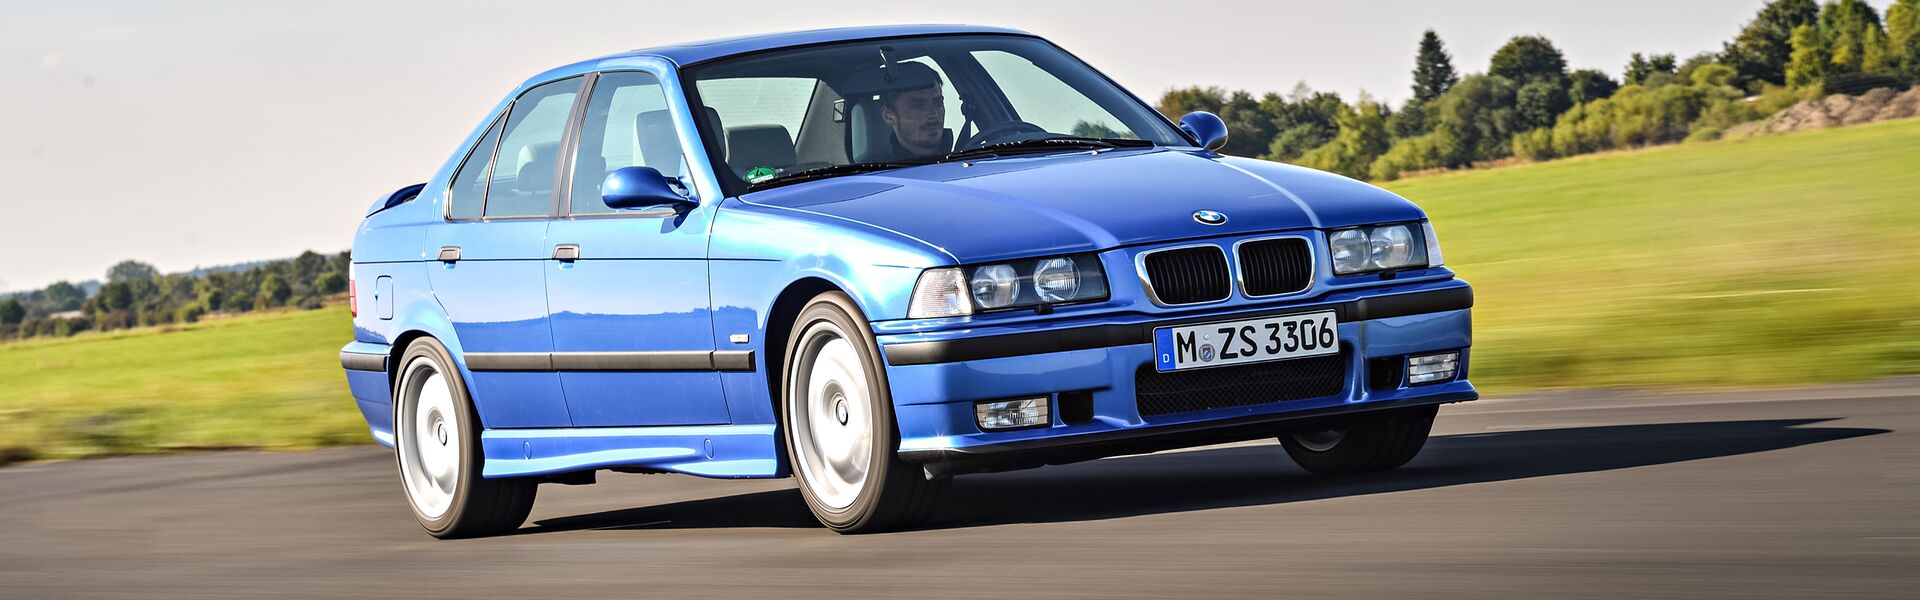 Performance díly pro automobil BMW M3 E36